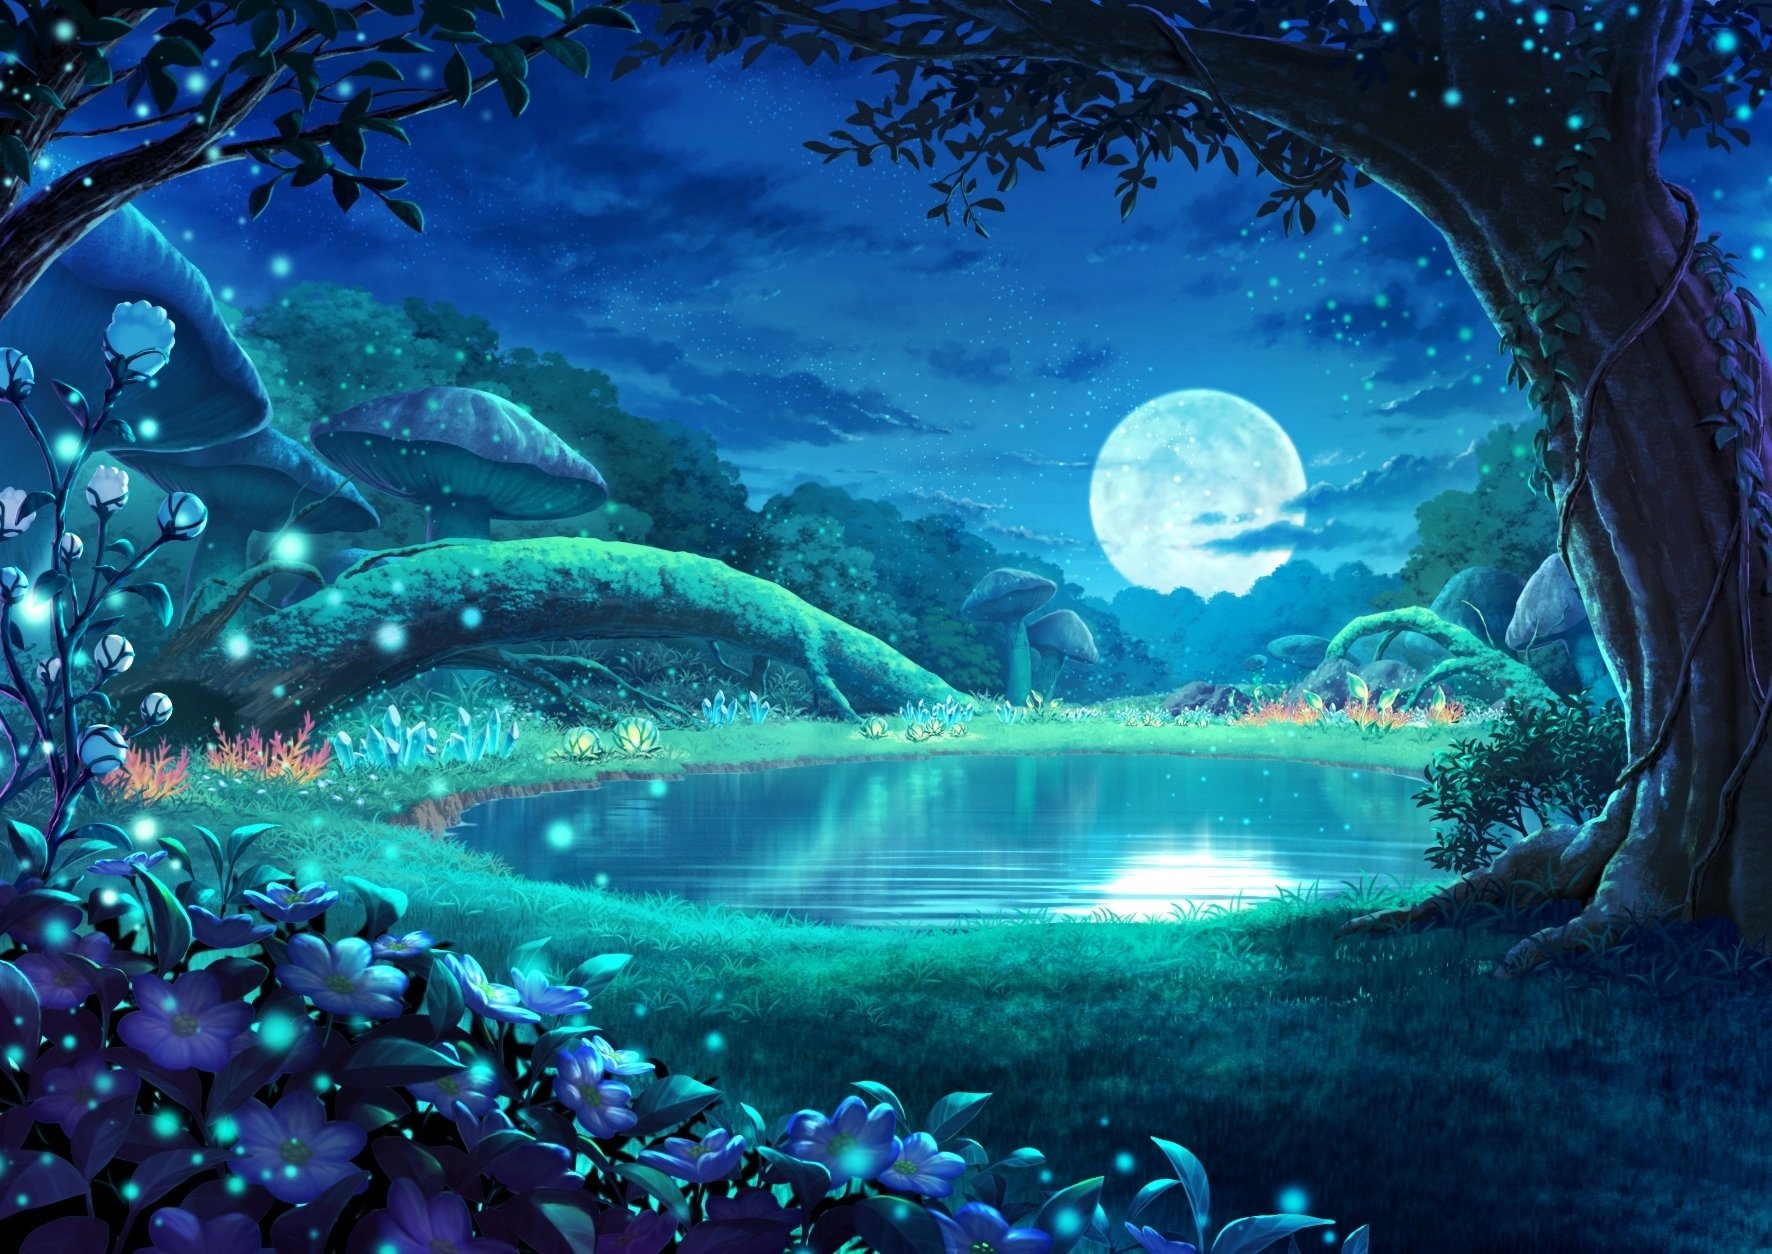 Wallpaper Forest, Anime Landscape, Moonlight, Reflection, Stars, Mushrooms, Night:1772x1254